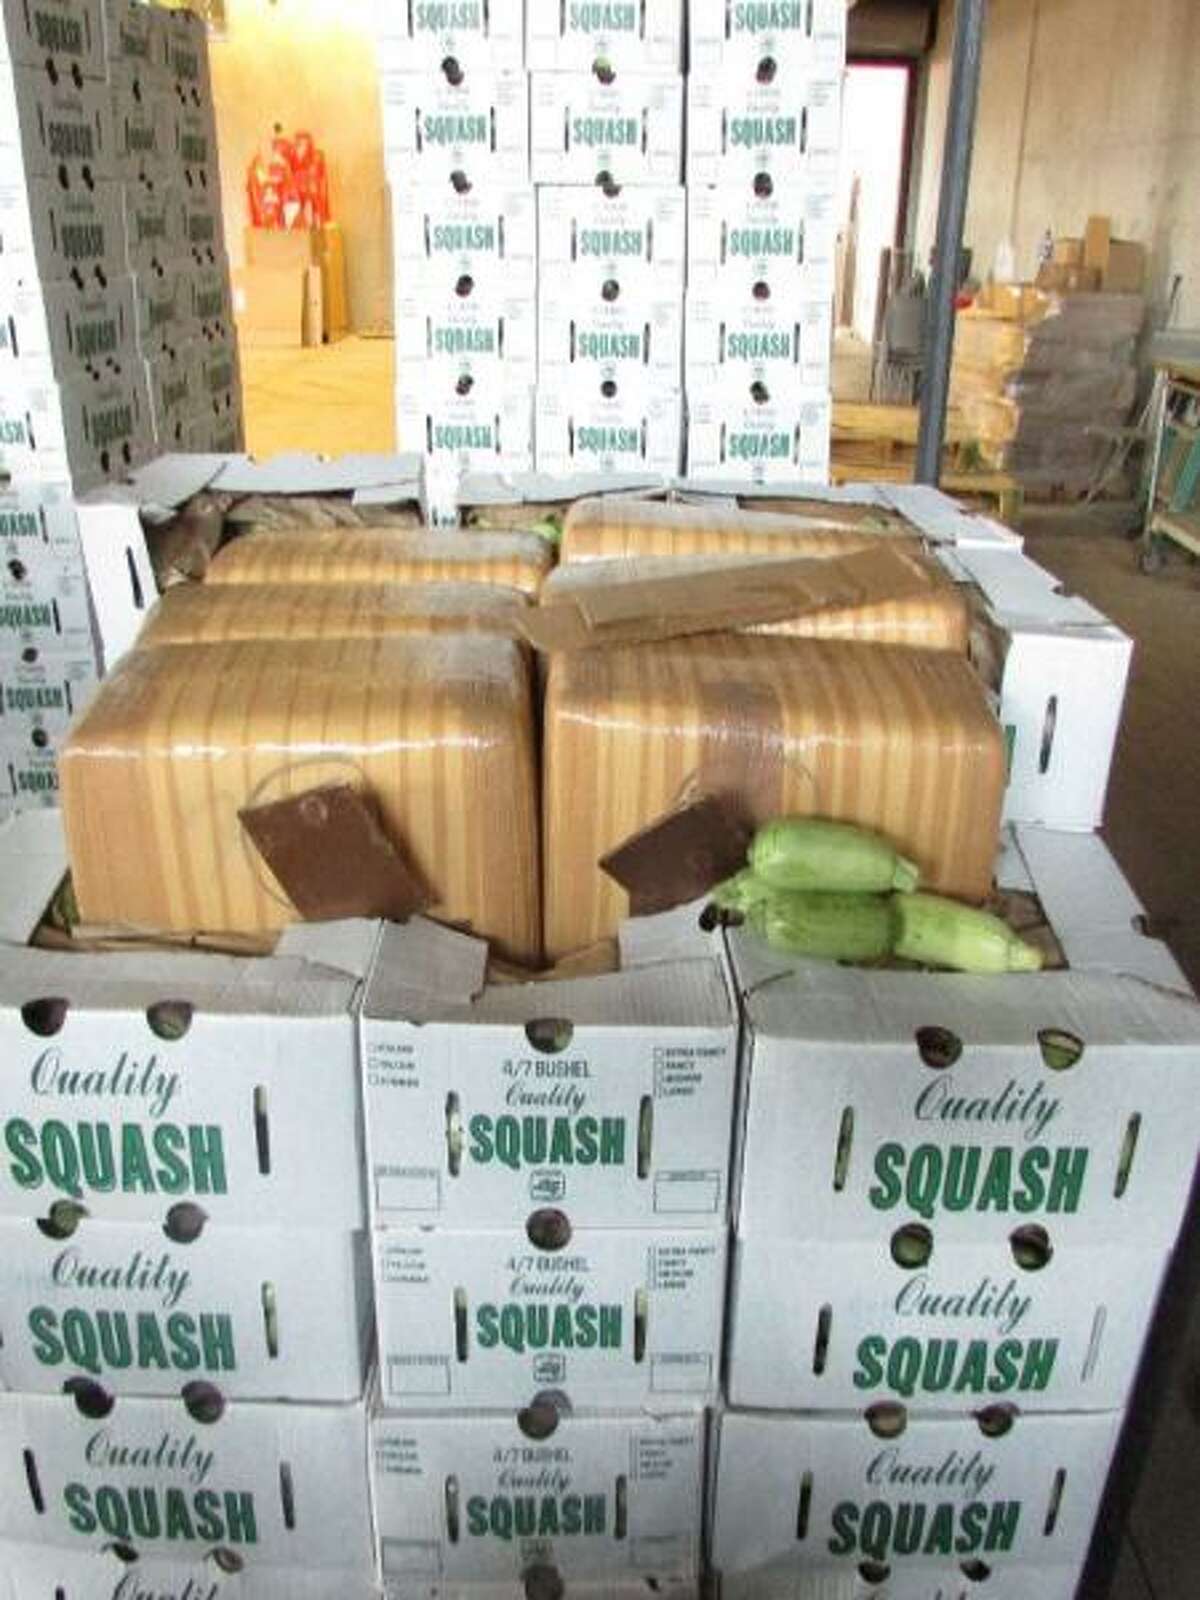 Authorities in Arizona found nearly $3 million worth of marijuana hidden in a truck hauling Italian squash last week, according to U.S. Customs and Border Protection.